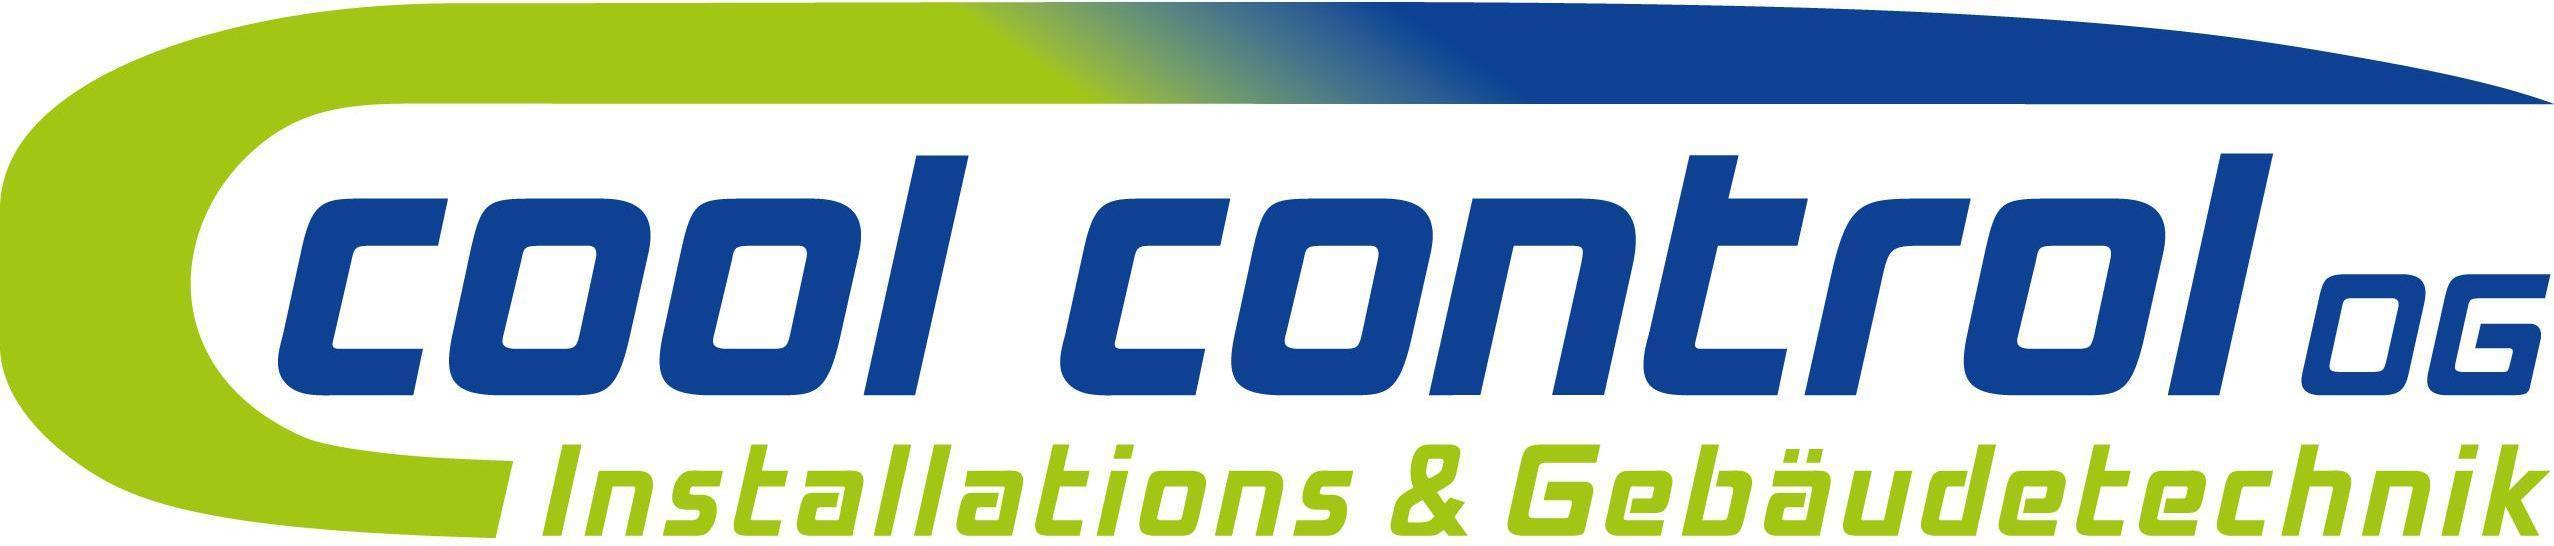 Logo Cool Control OG Installations & Gebäudetechnik